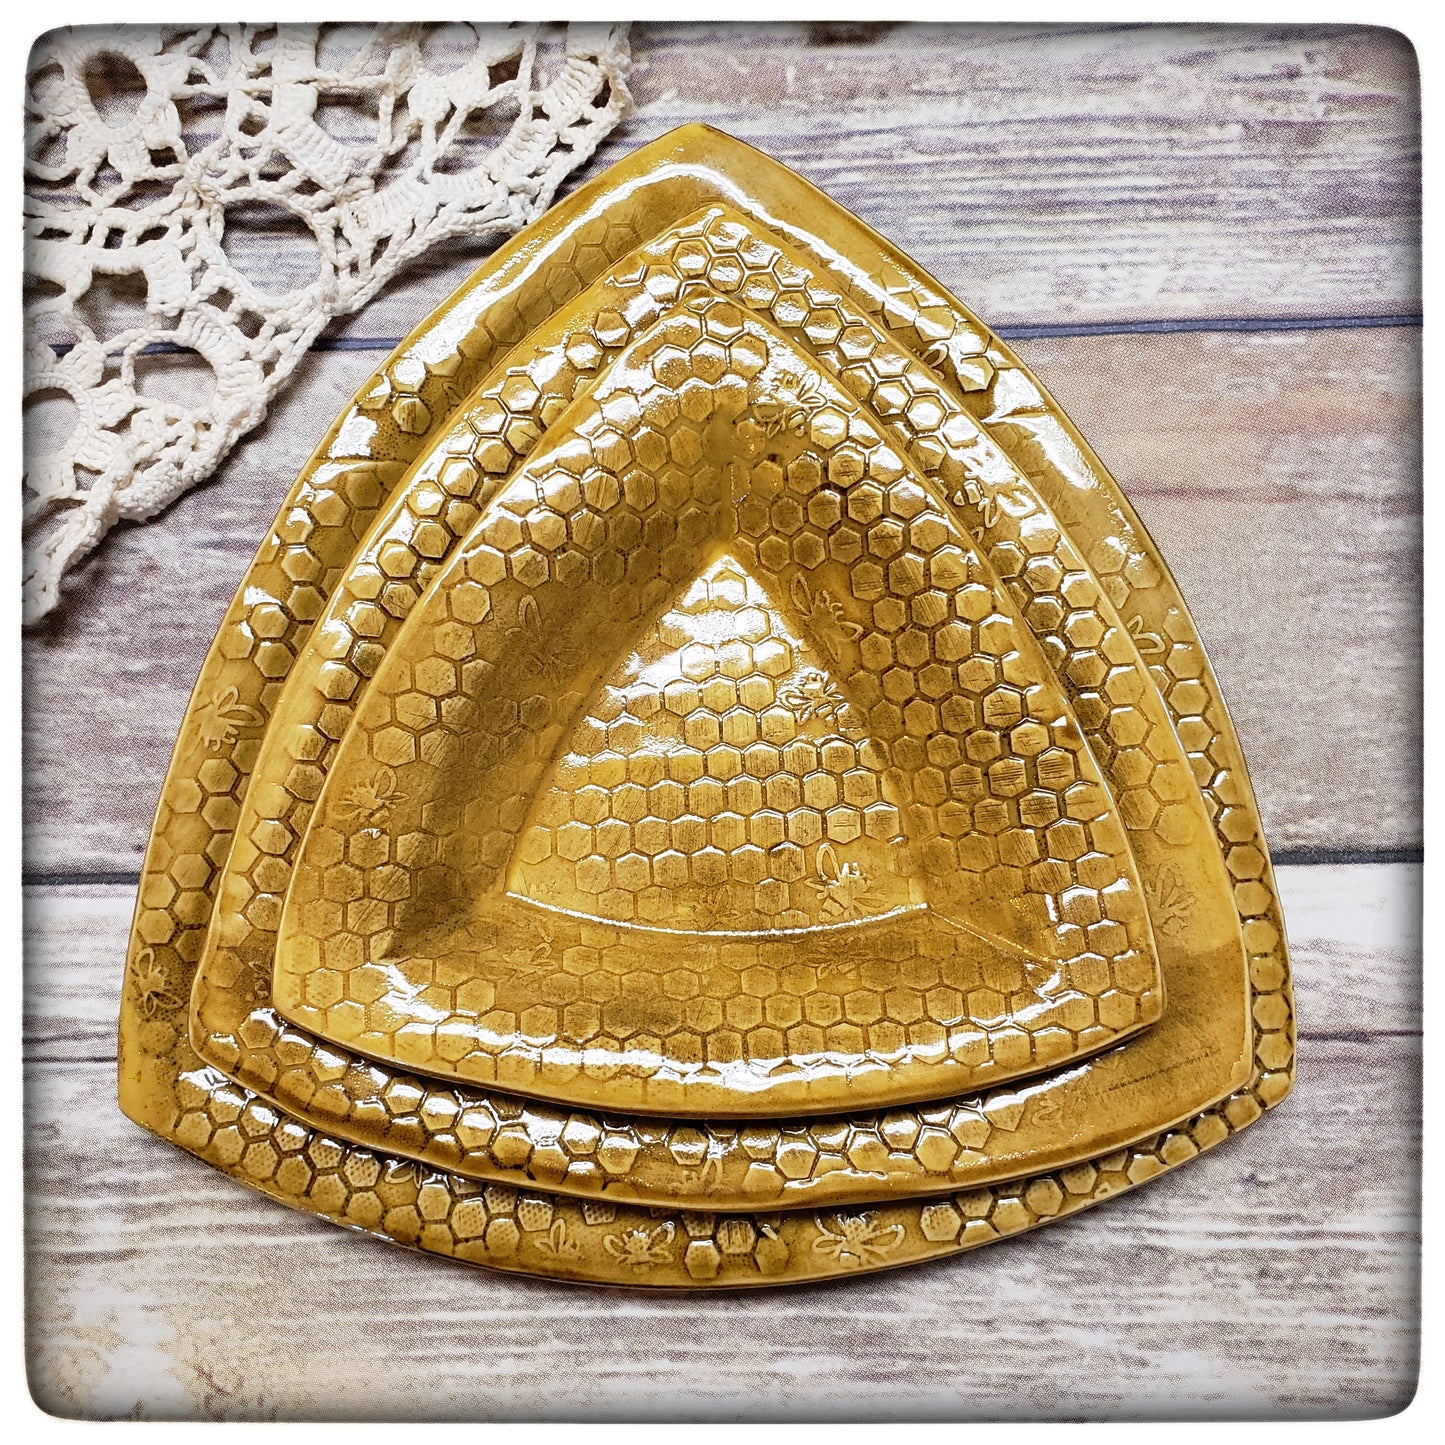 Honeycomb triangle dish (8.5 inch)